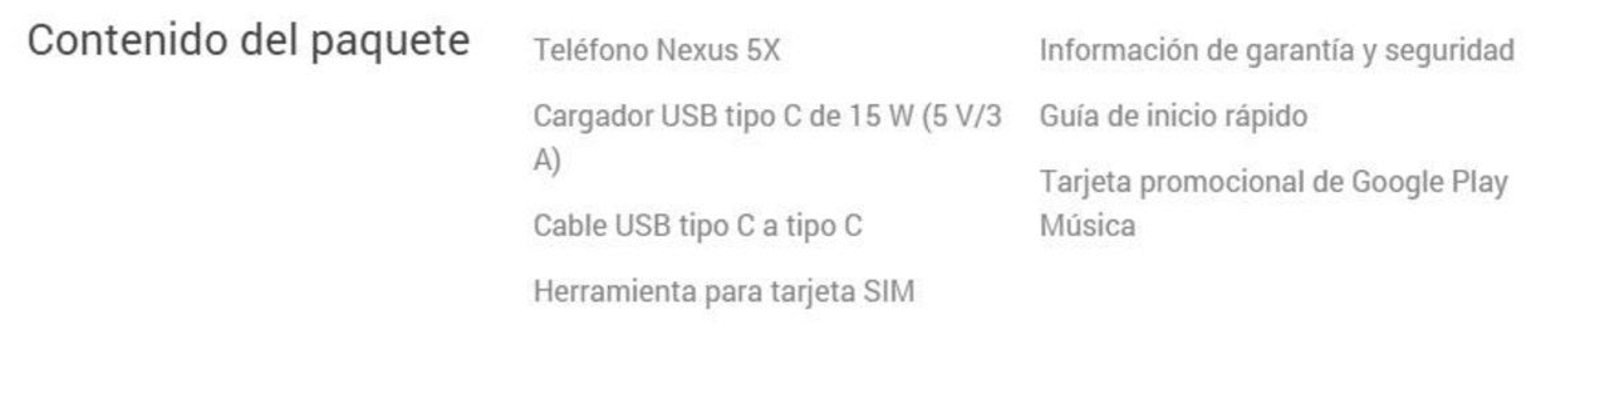 Contenido Paquete Nexus 5X